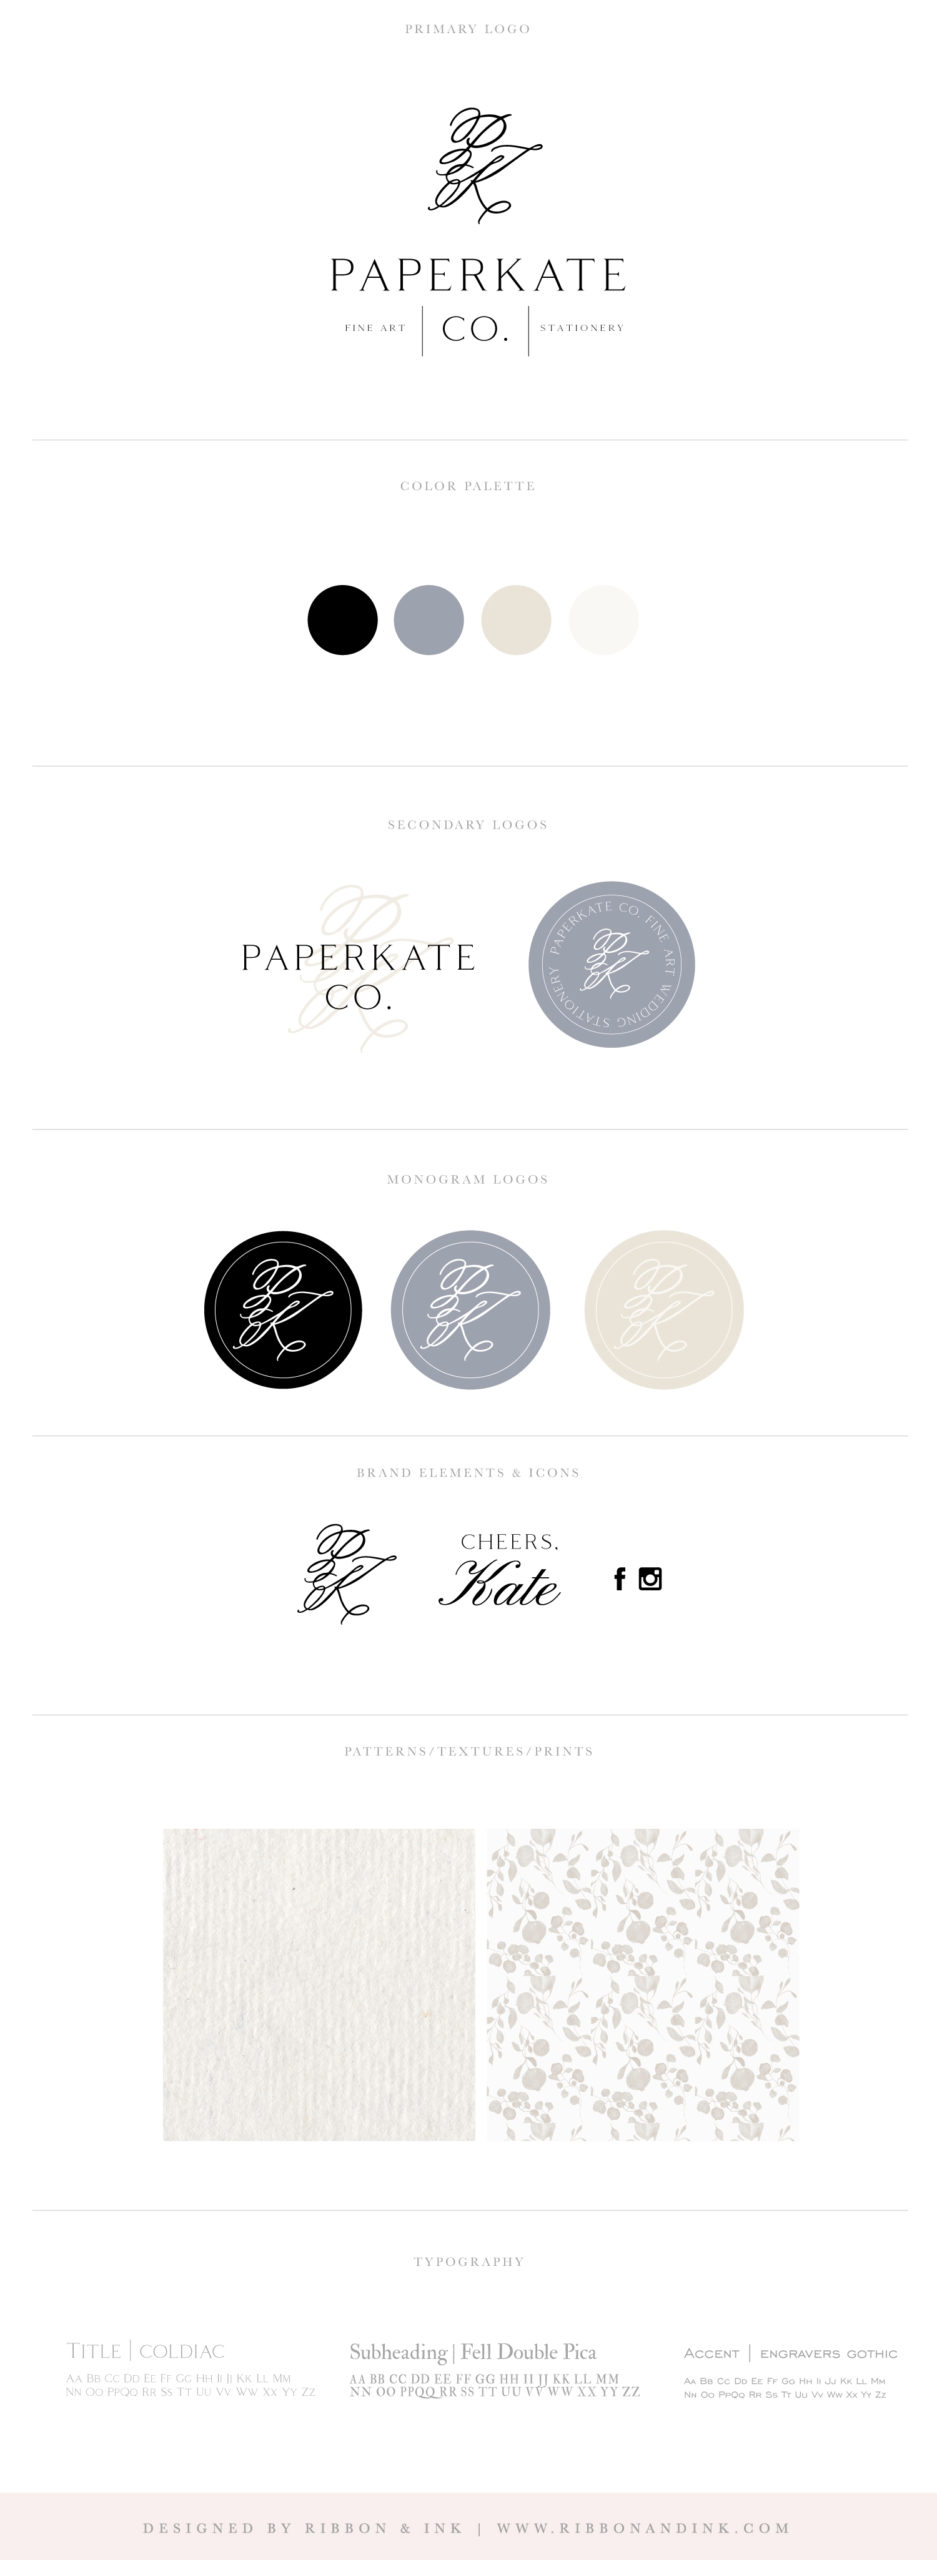 brand board / branding identity / branding for creatives and wedding businesses / wedding stationery / logo design / calligraphy